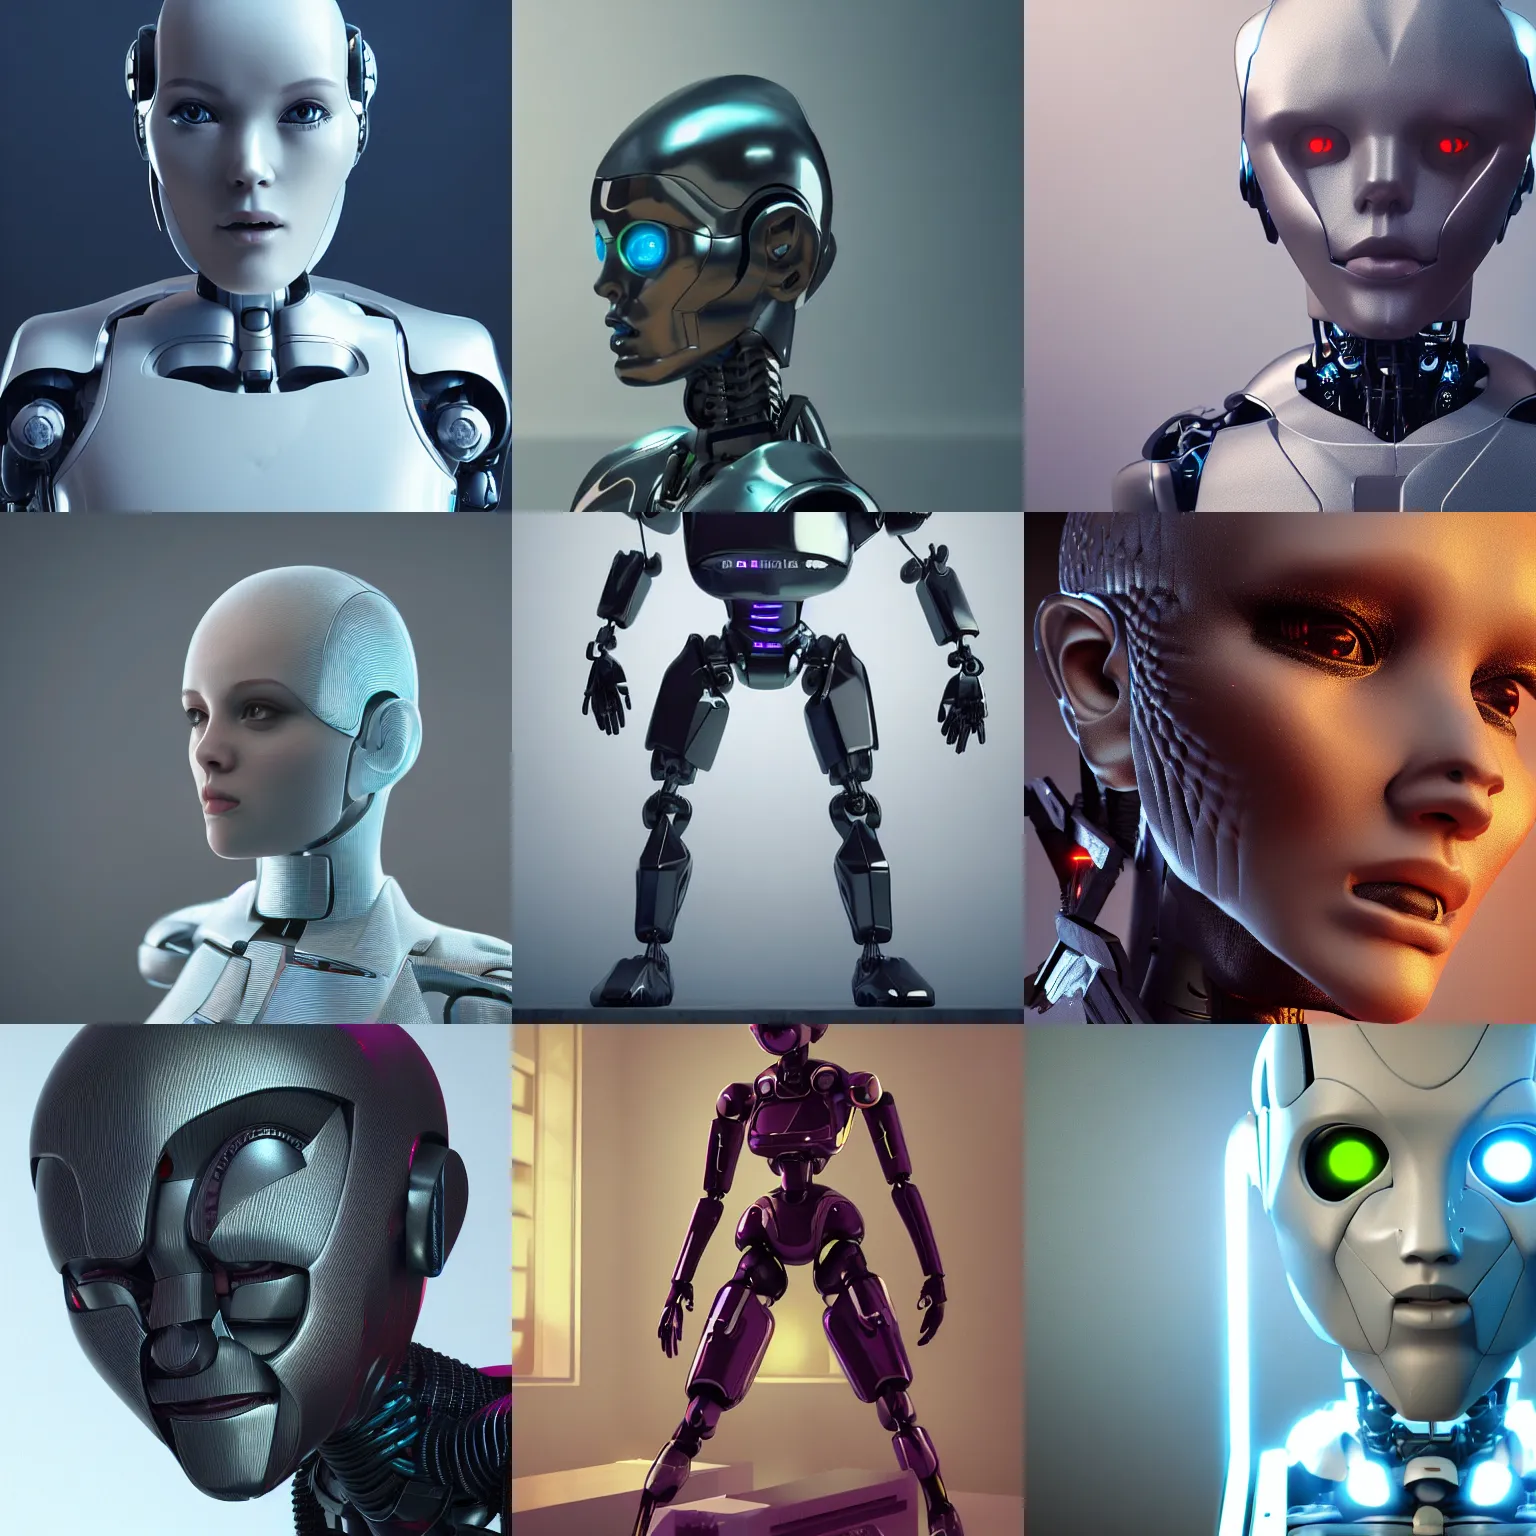 Prompt: artificial intelligence androids taking over, stunning octane render, trending on artstation